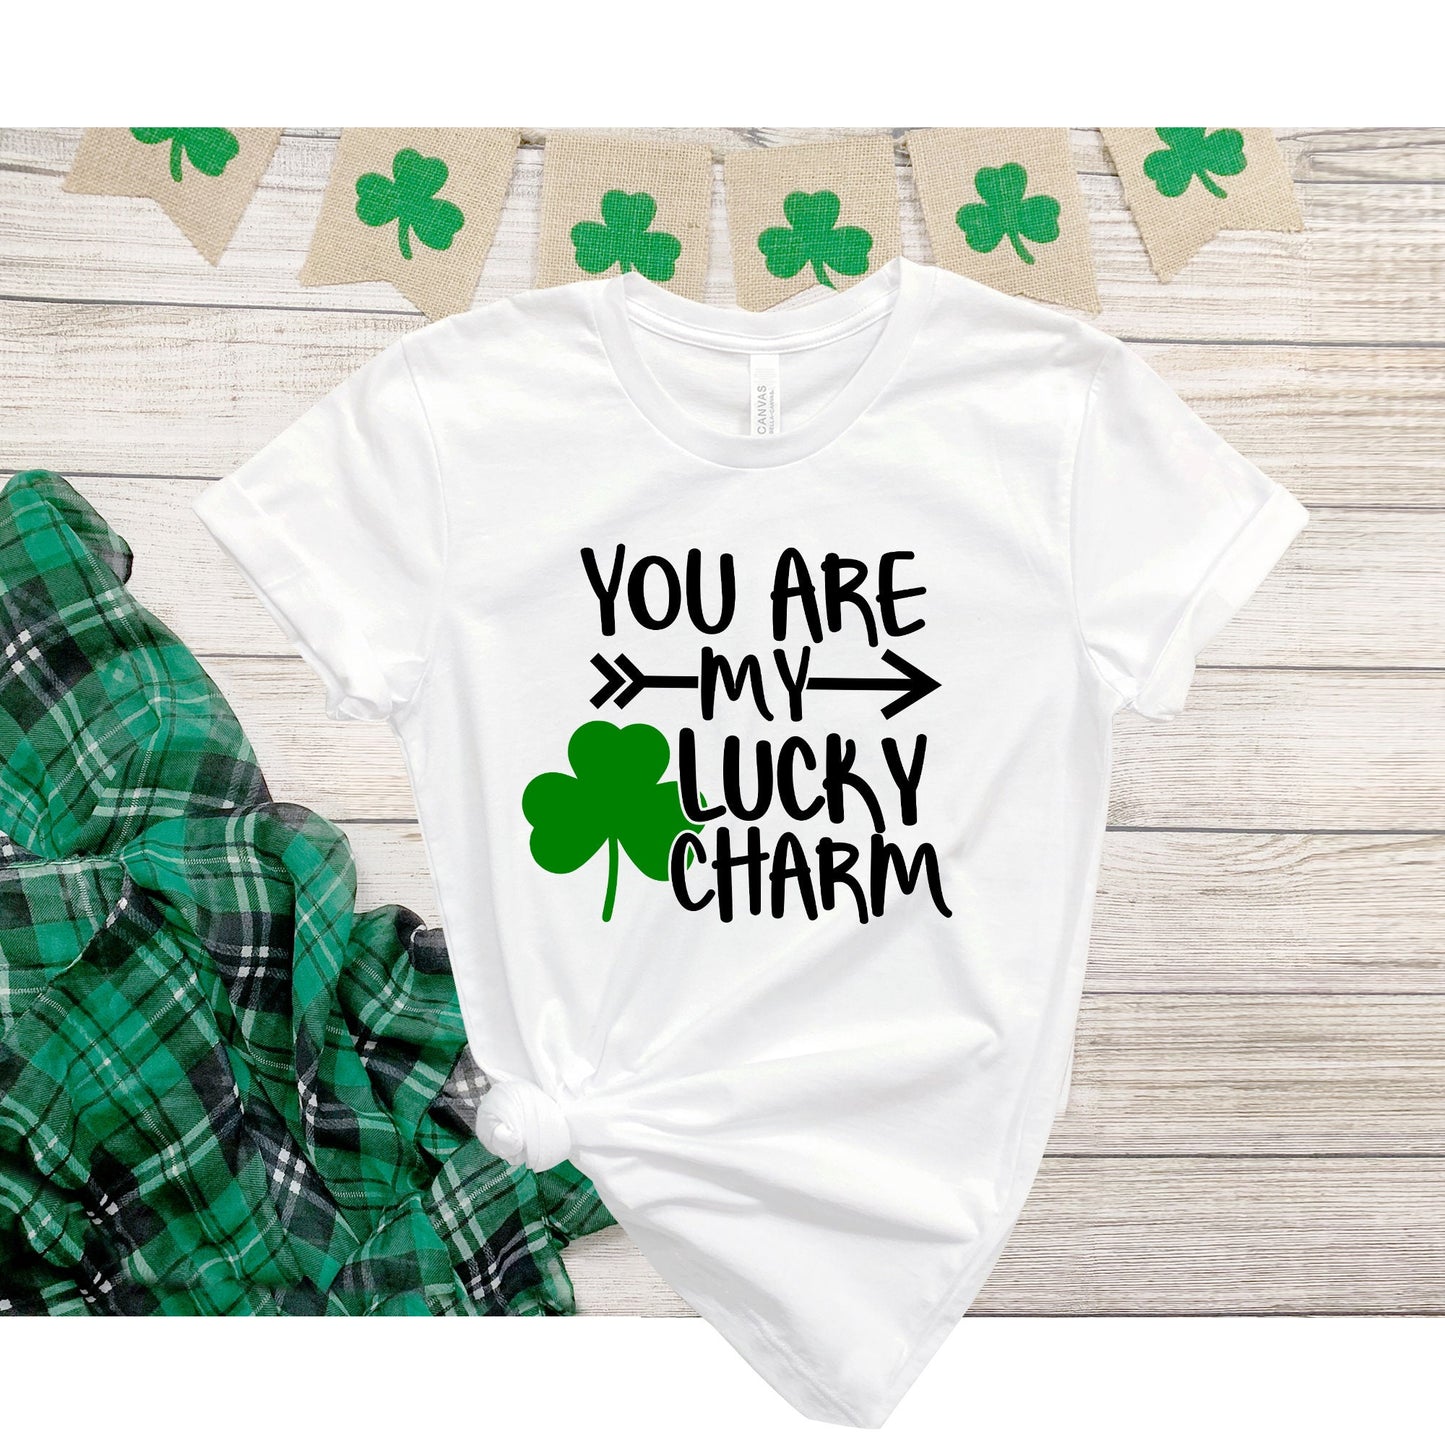 Matching His and Hers St. Patrick's Day Shirts, Irish Shirt, St. Patrick's Day T-Shirt, Luck of the Irish, Shamrock Shirt